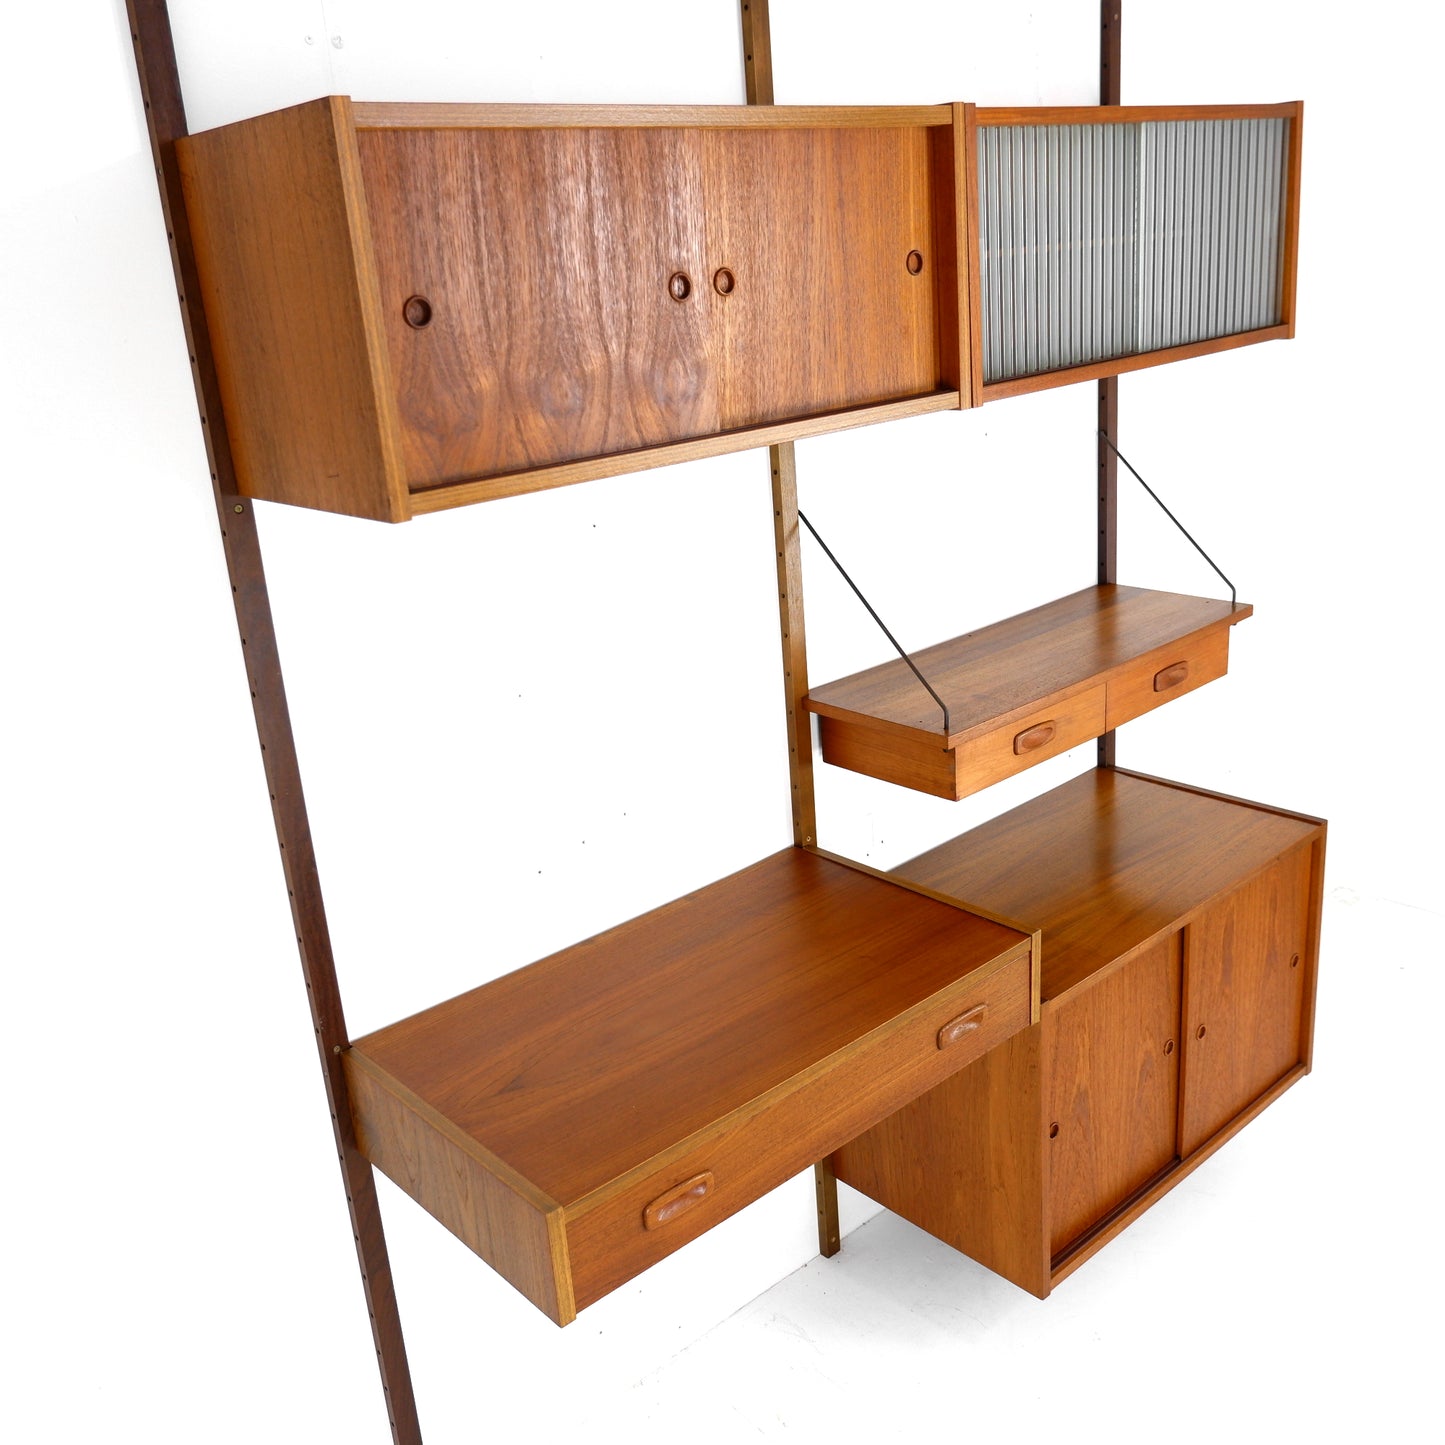 Danish PS System Teak Wall Units - 2 Bays - Desk, Bookshelves and Cabinets - Modular Ladder Shelving